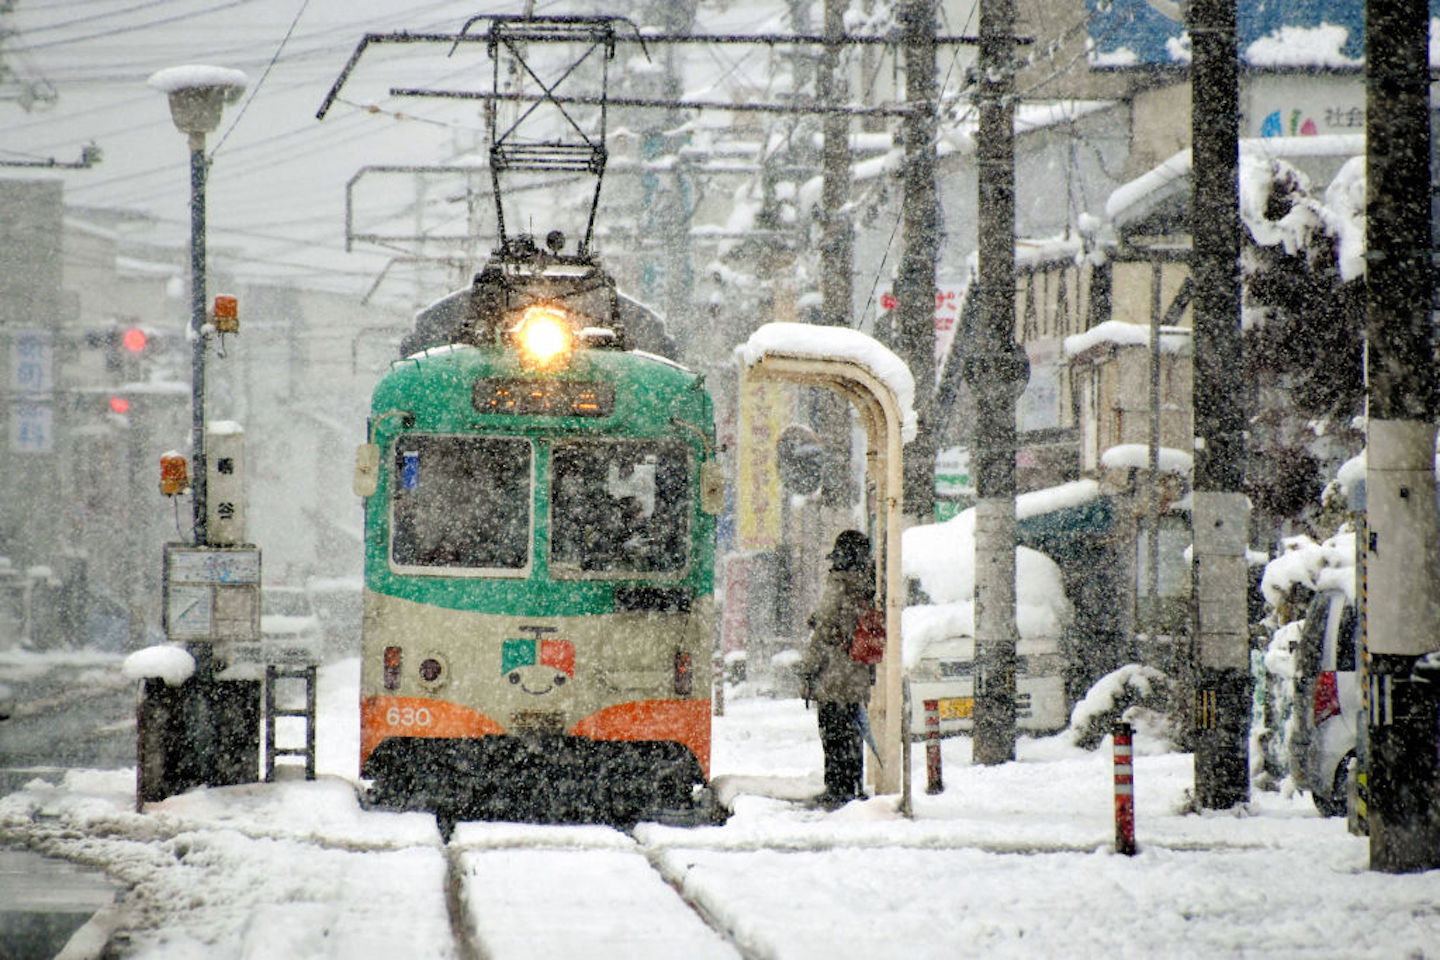 Trem membelah jalanan bersalju di Kochi, Jepang, pada 23 Desember 2022. Foto: The Asahi Shimbun via Getty Images